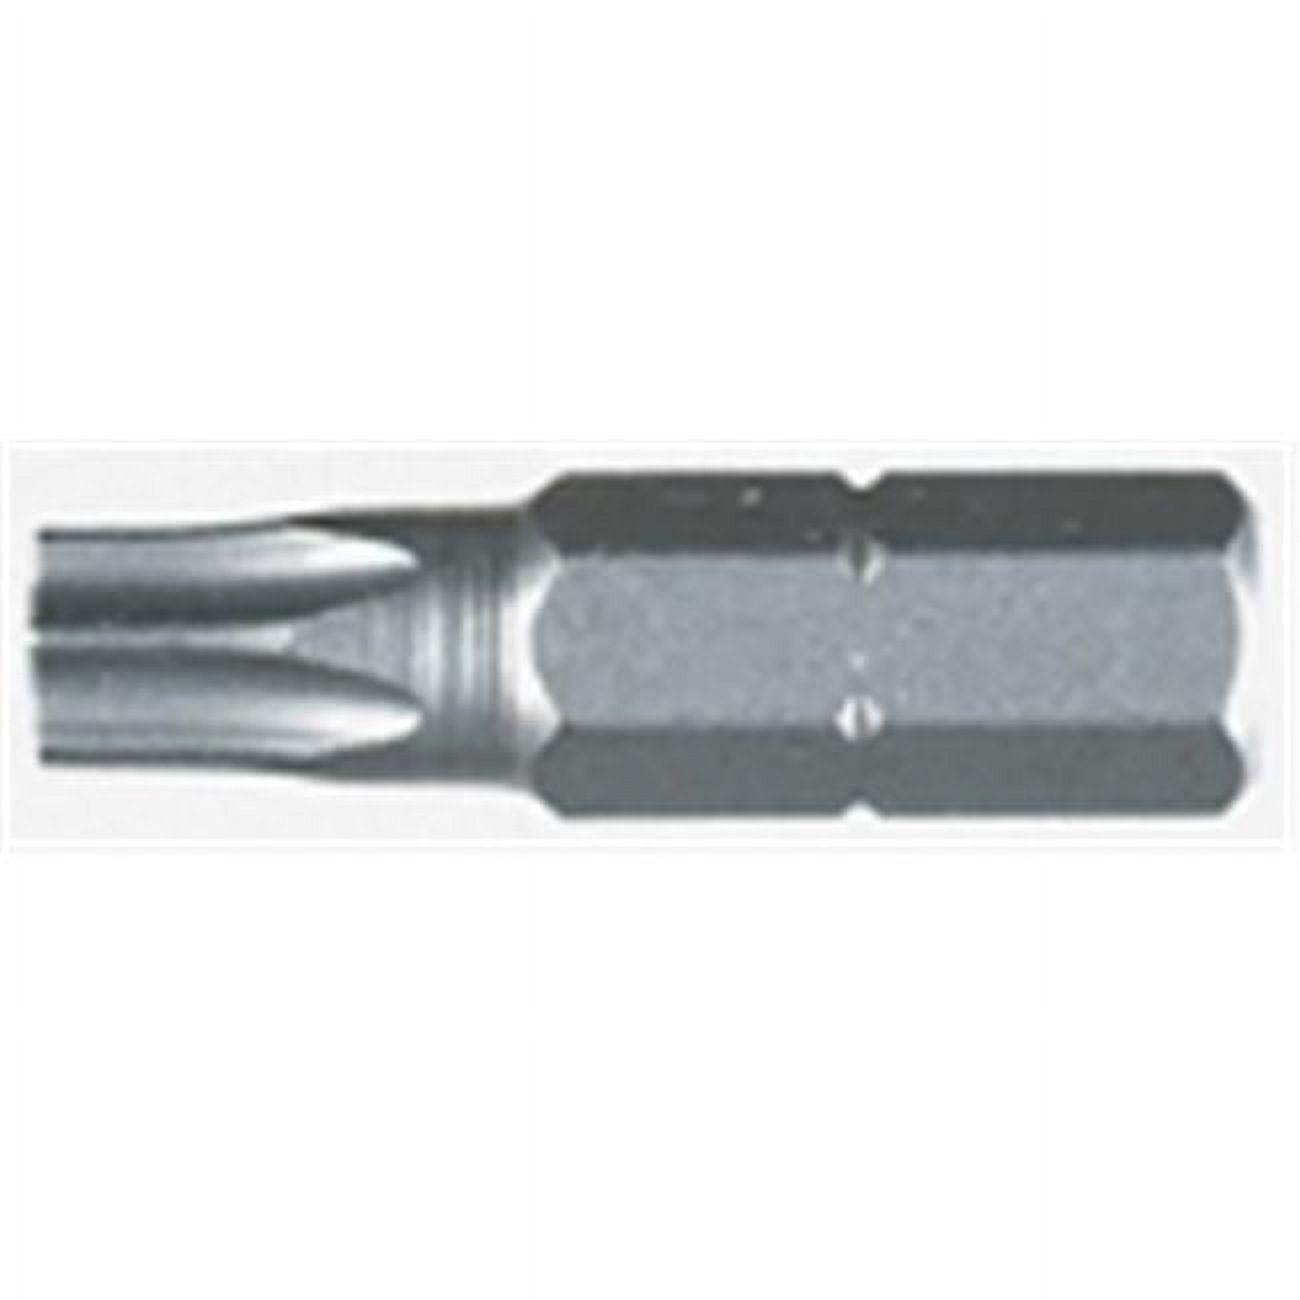 Wiha Tools 72580 Torx Contractor Grade Insert Bit - T30 x 25 mm., 30 Pieces - image 1 of 4